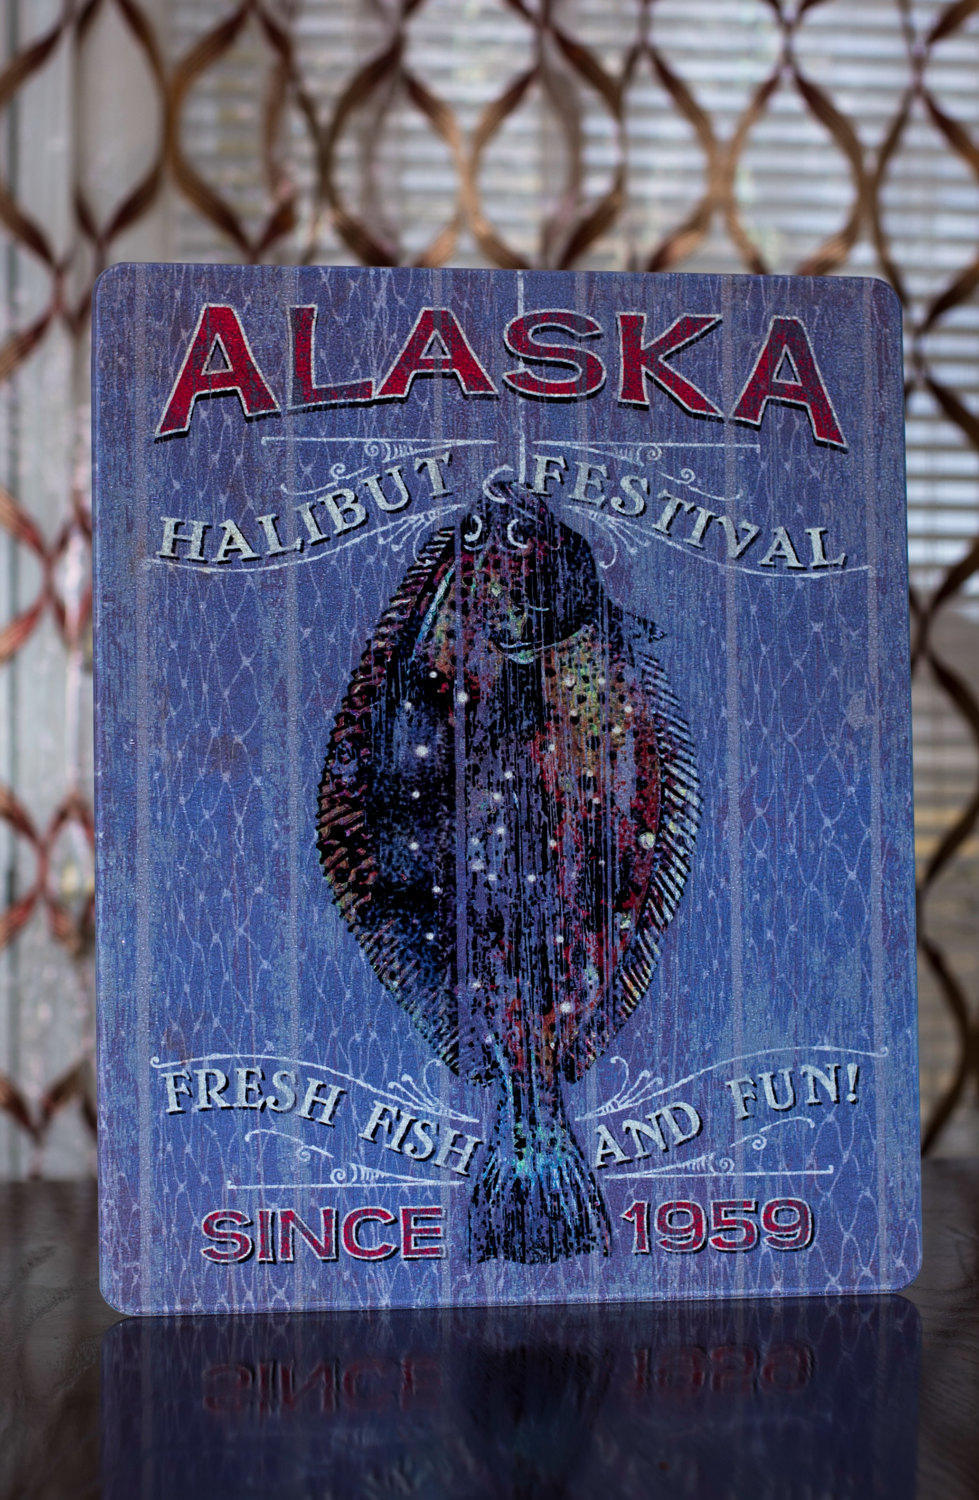 Alaska Halibut Festival Fish Cutting Board